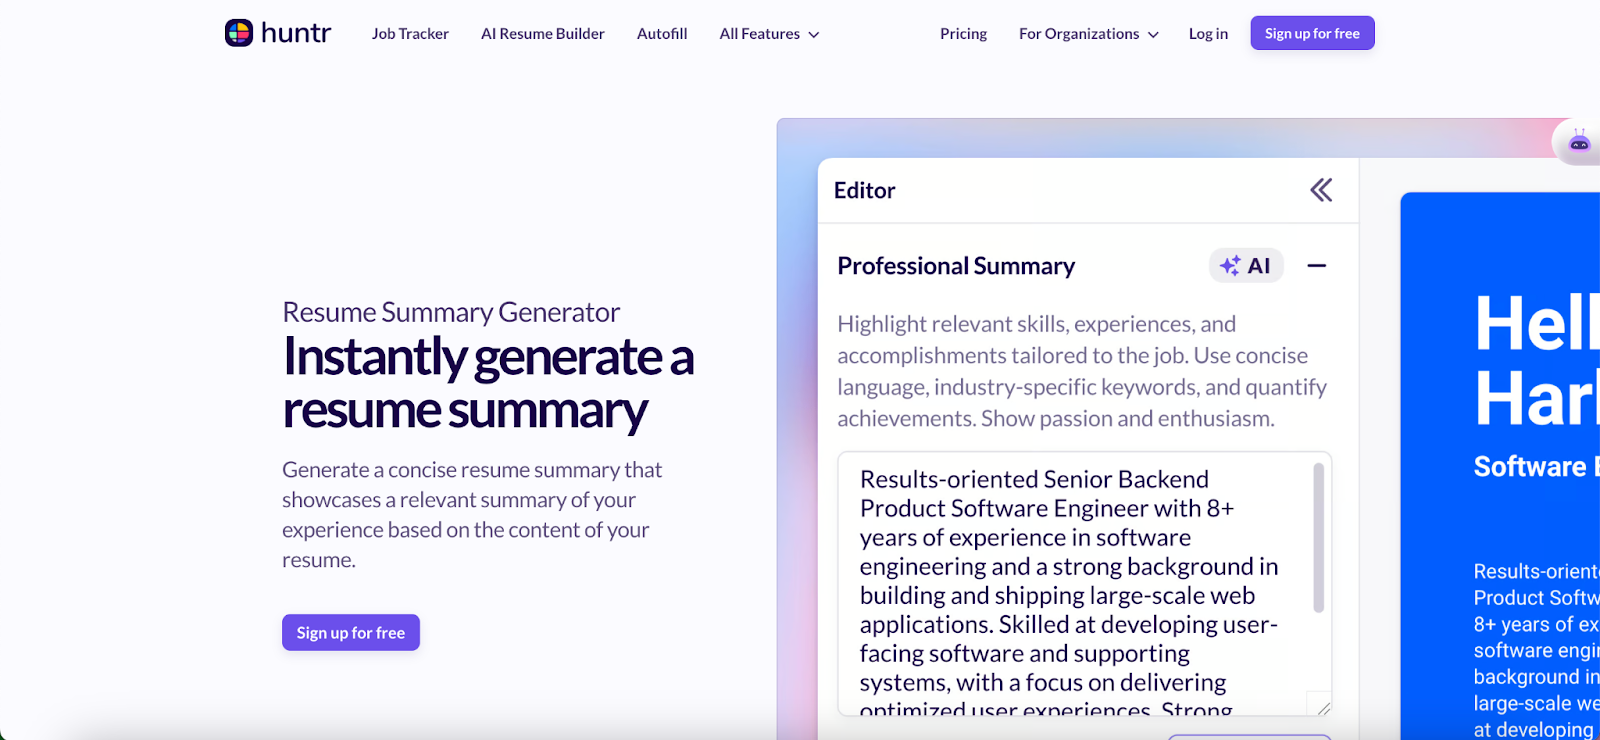 Resume summary generators - Huntr